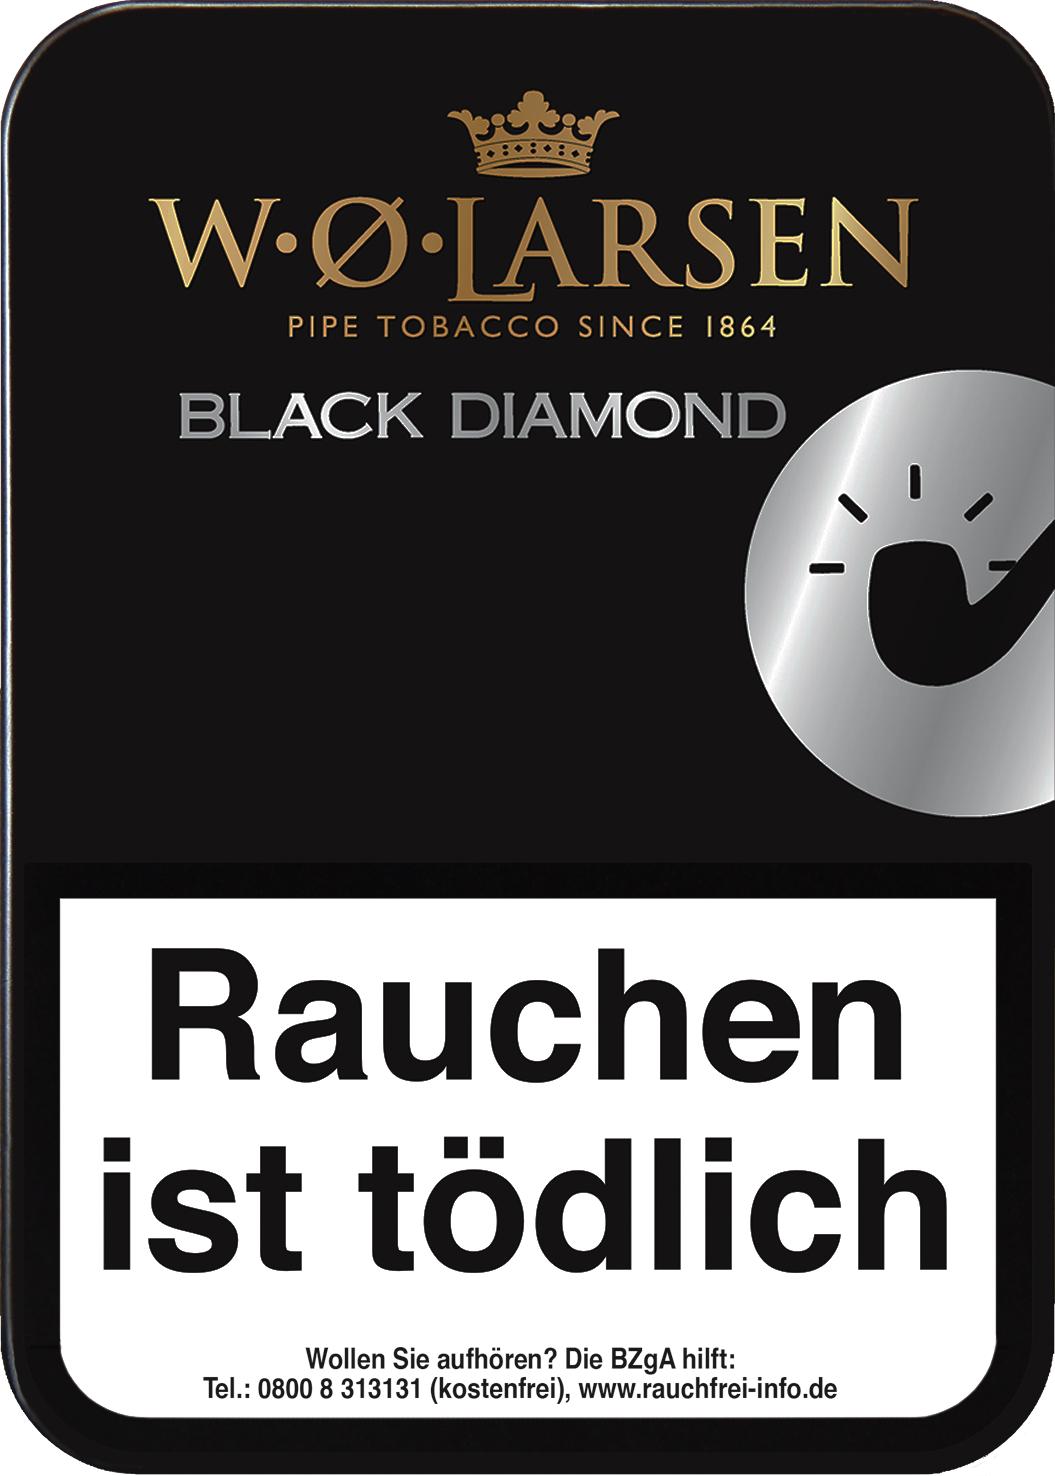 W.O. Larsen Black Diamond Pfeifentabak 1 x 100g Krüll